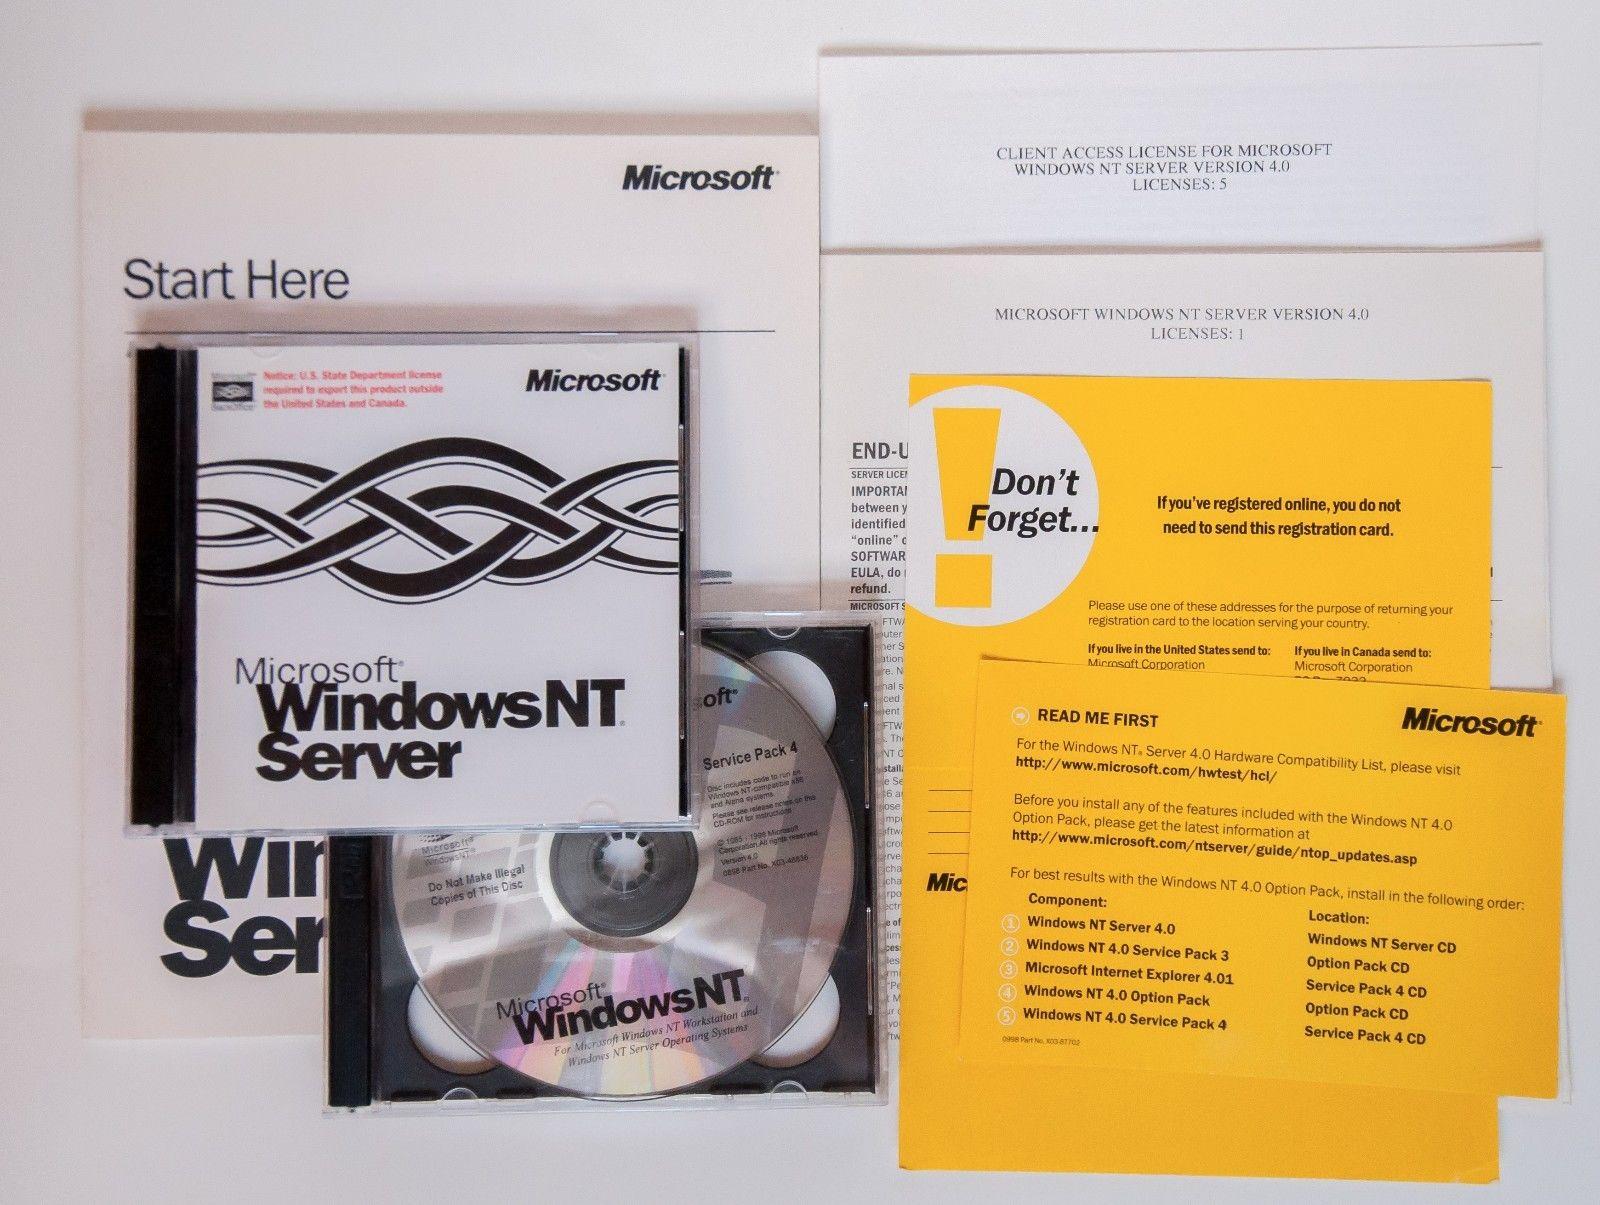 Windows NT Server Logo - Microsoft Windows NT Server 4.0 PC CD retail box 5 Client Access